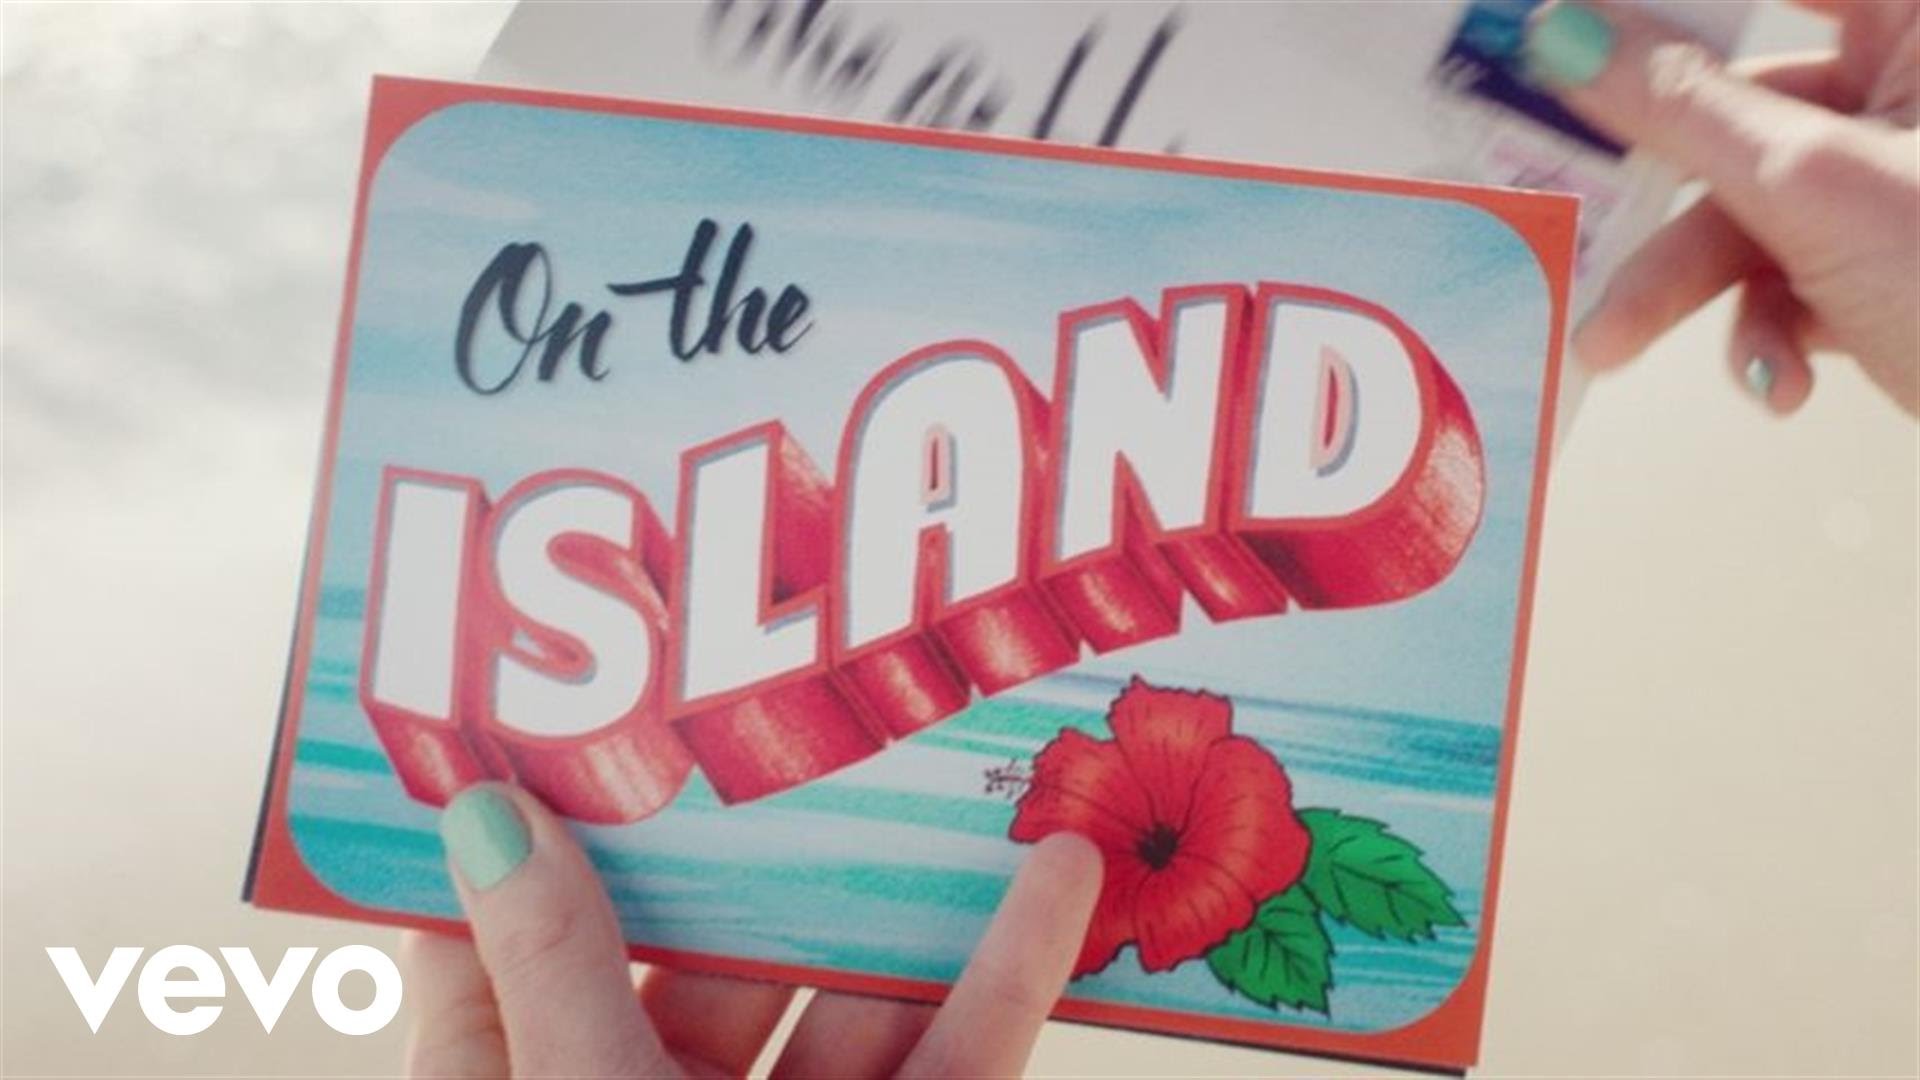 Brian Wilson - On The Island (Lyric Video) ft. She & Him - YouTube